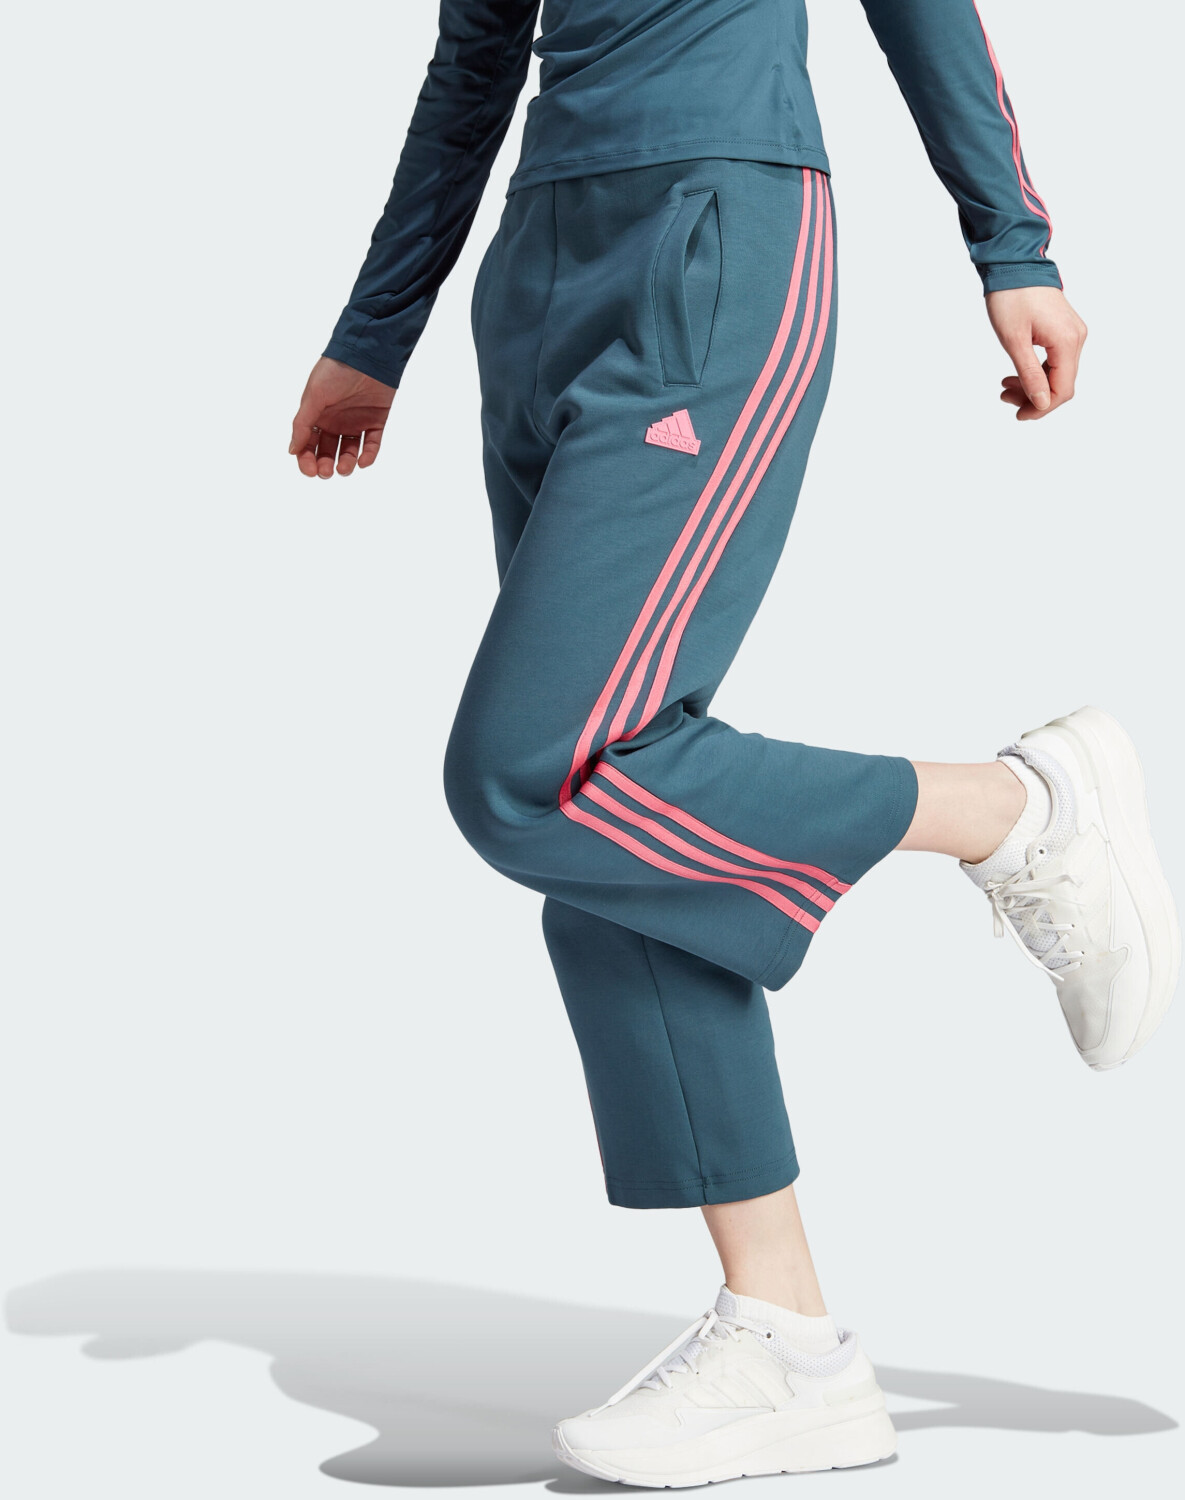 Adidas Woman Future Icons 3-Stripes Pants Arctic Night (IM2451) ab 44,54 €  | Preisvergleich bei